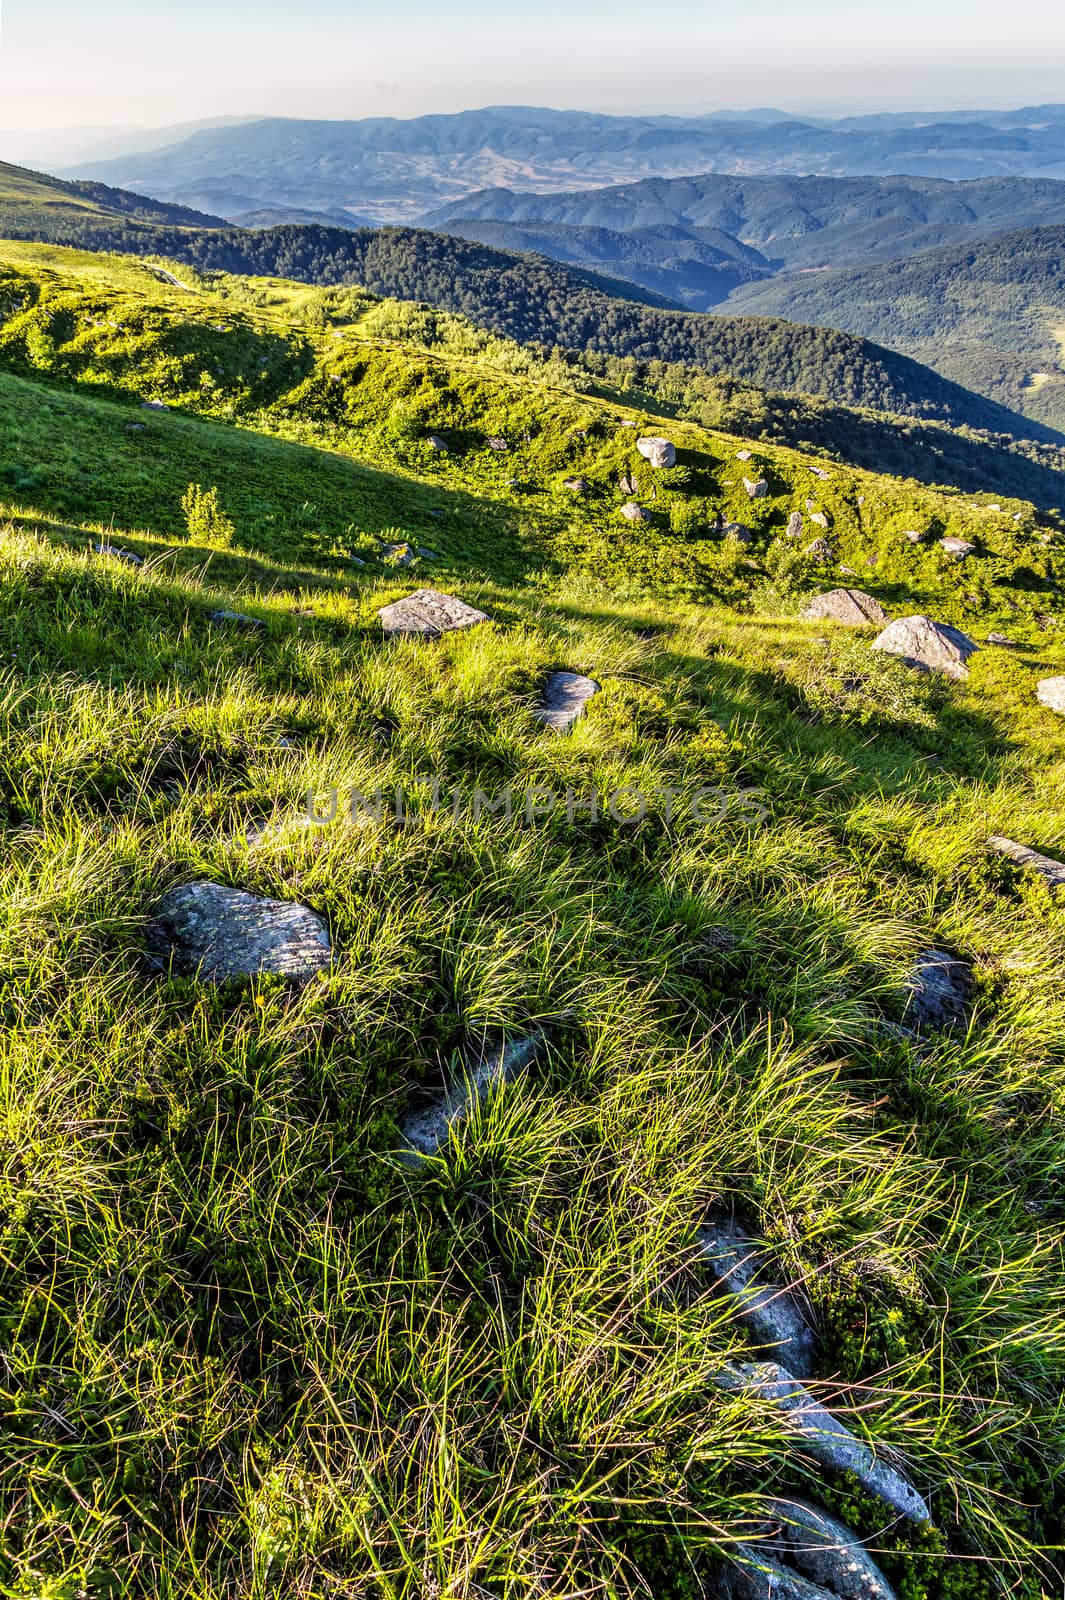 boulders on the hillside by Pellinni